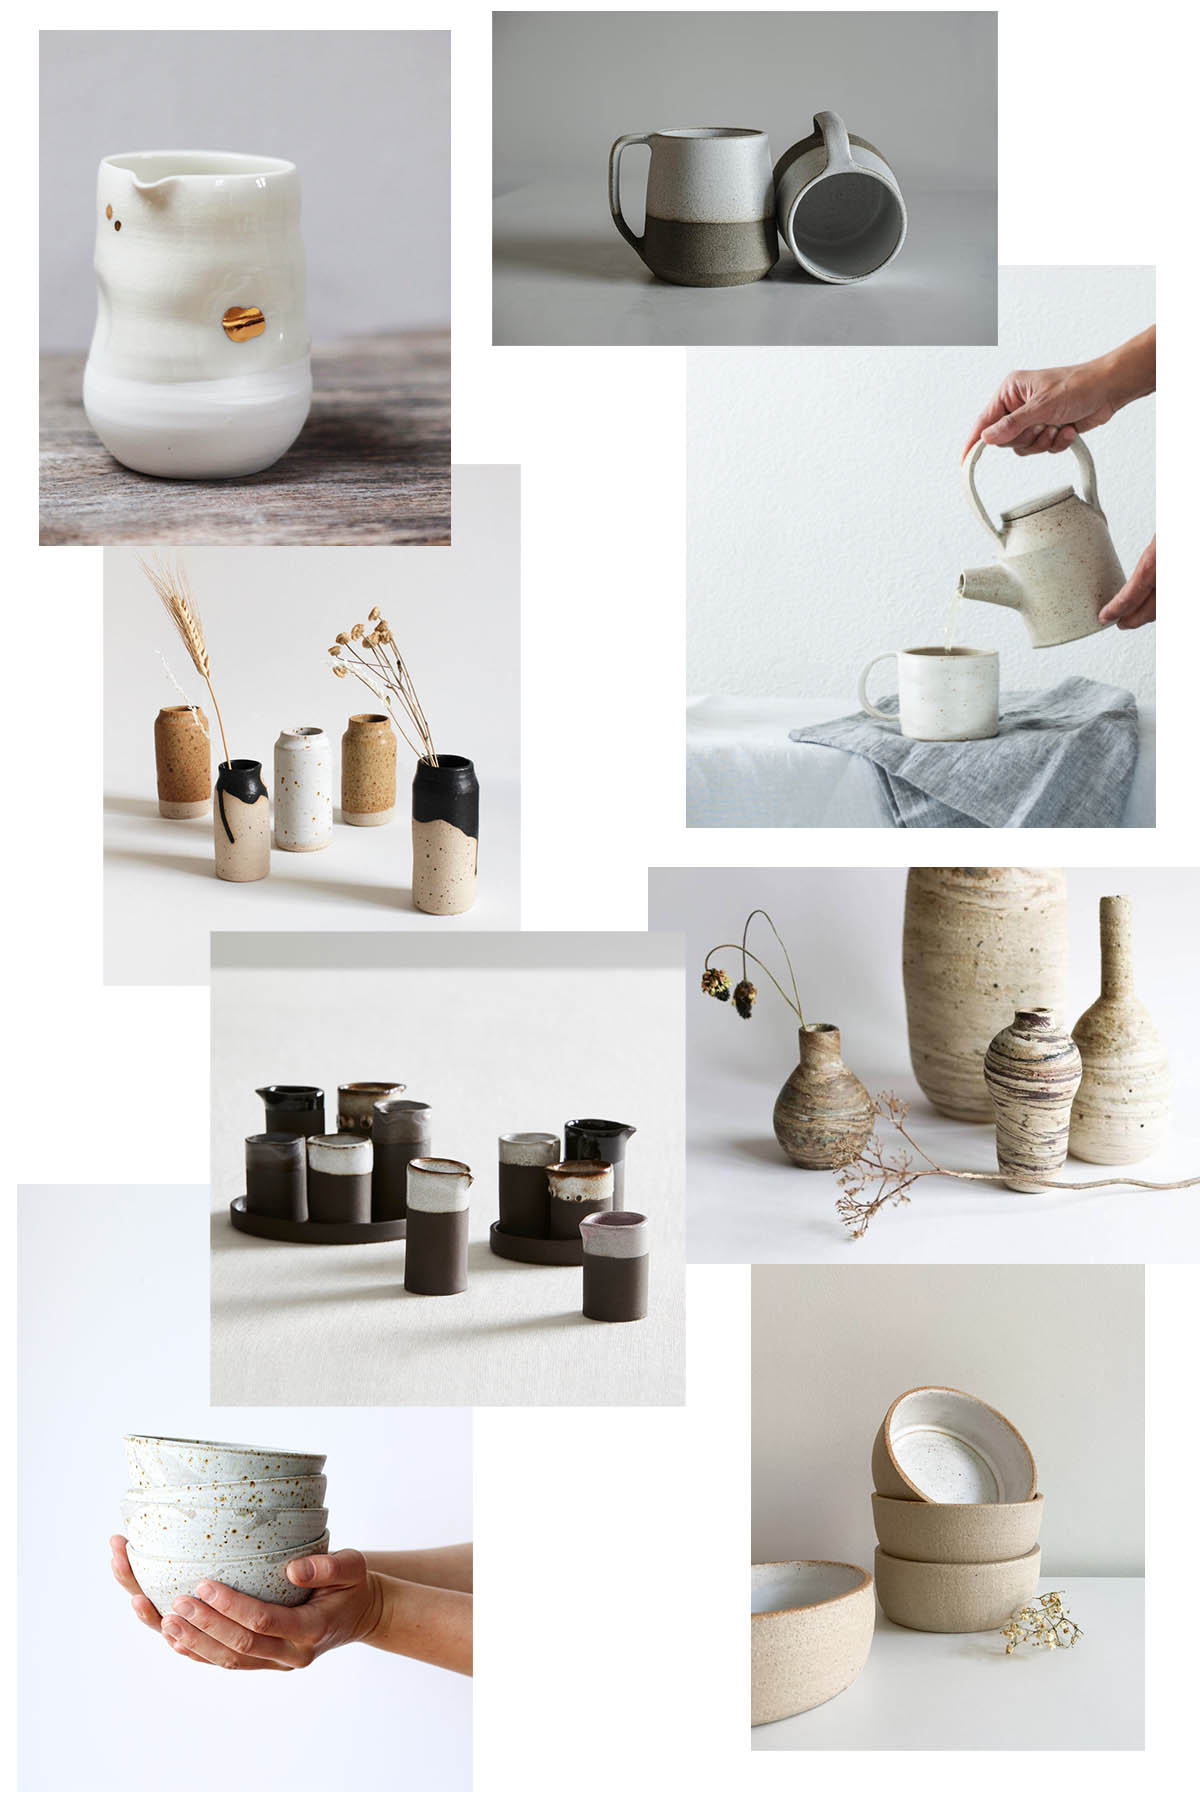 Image set of various ceramic pieces.